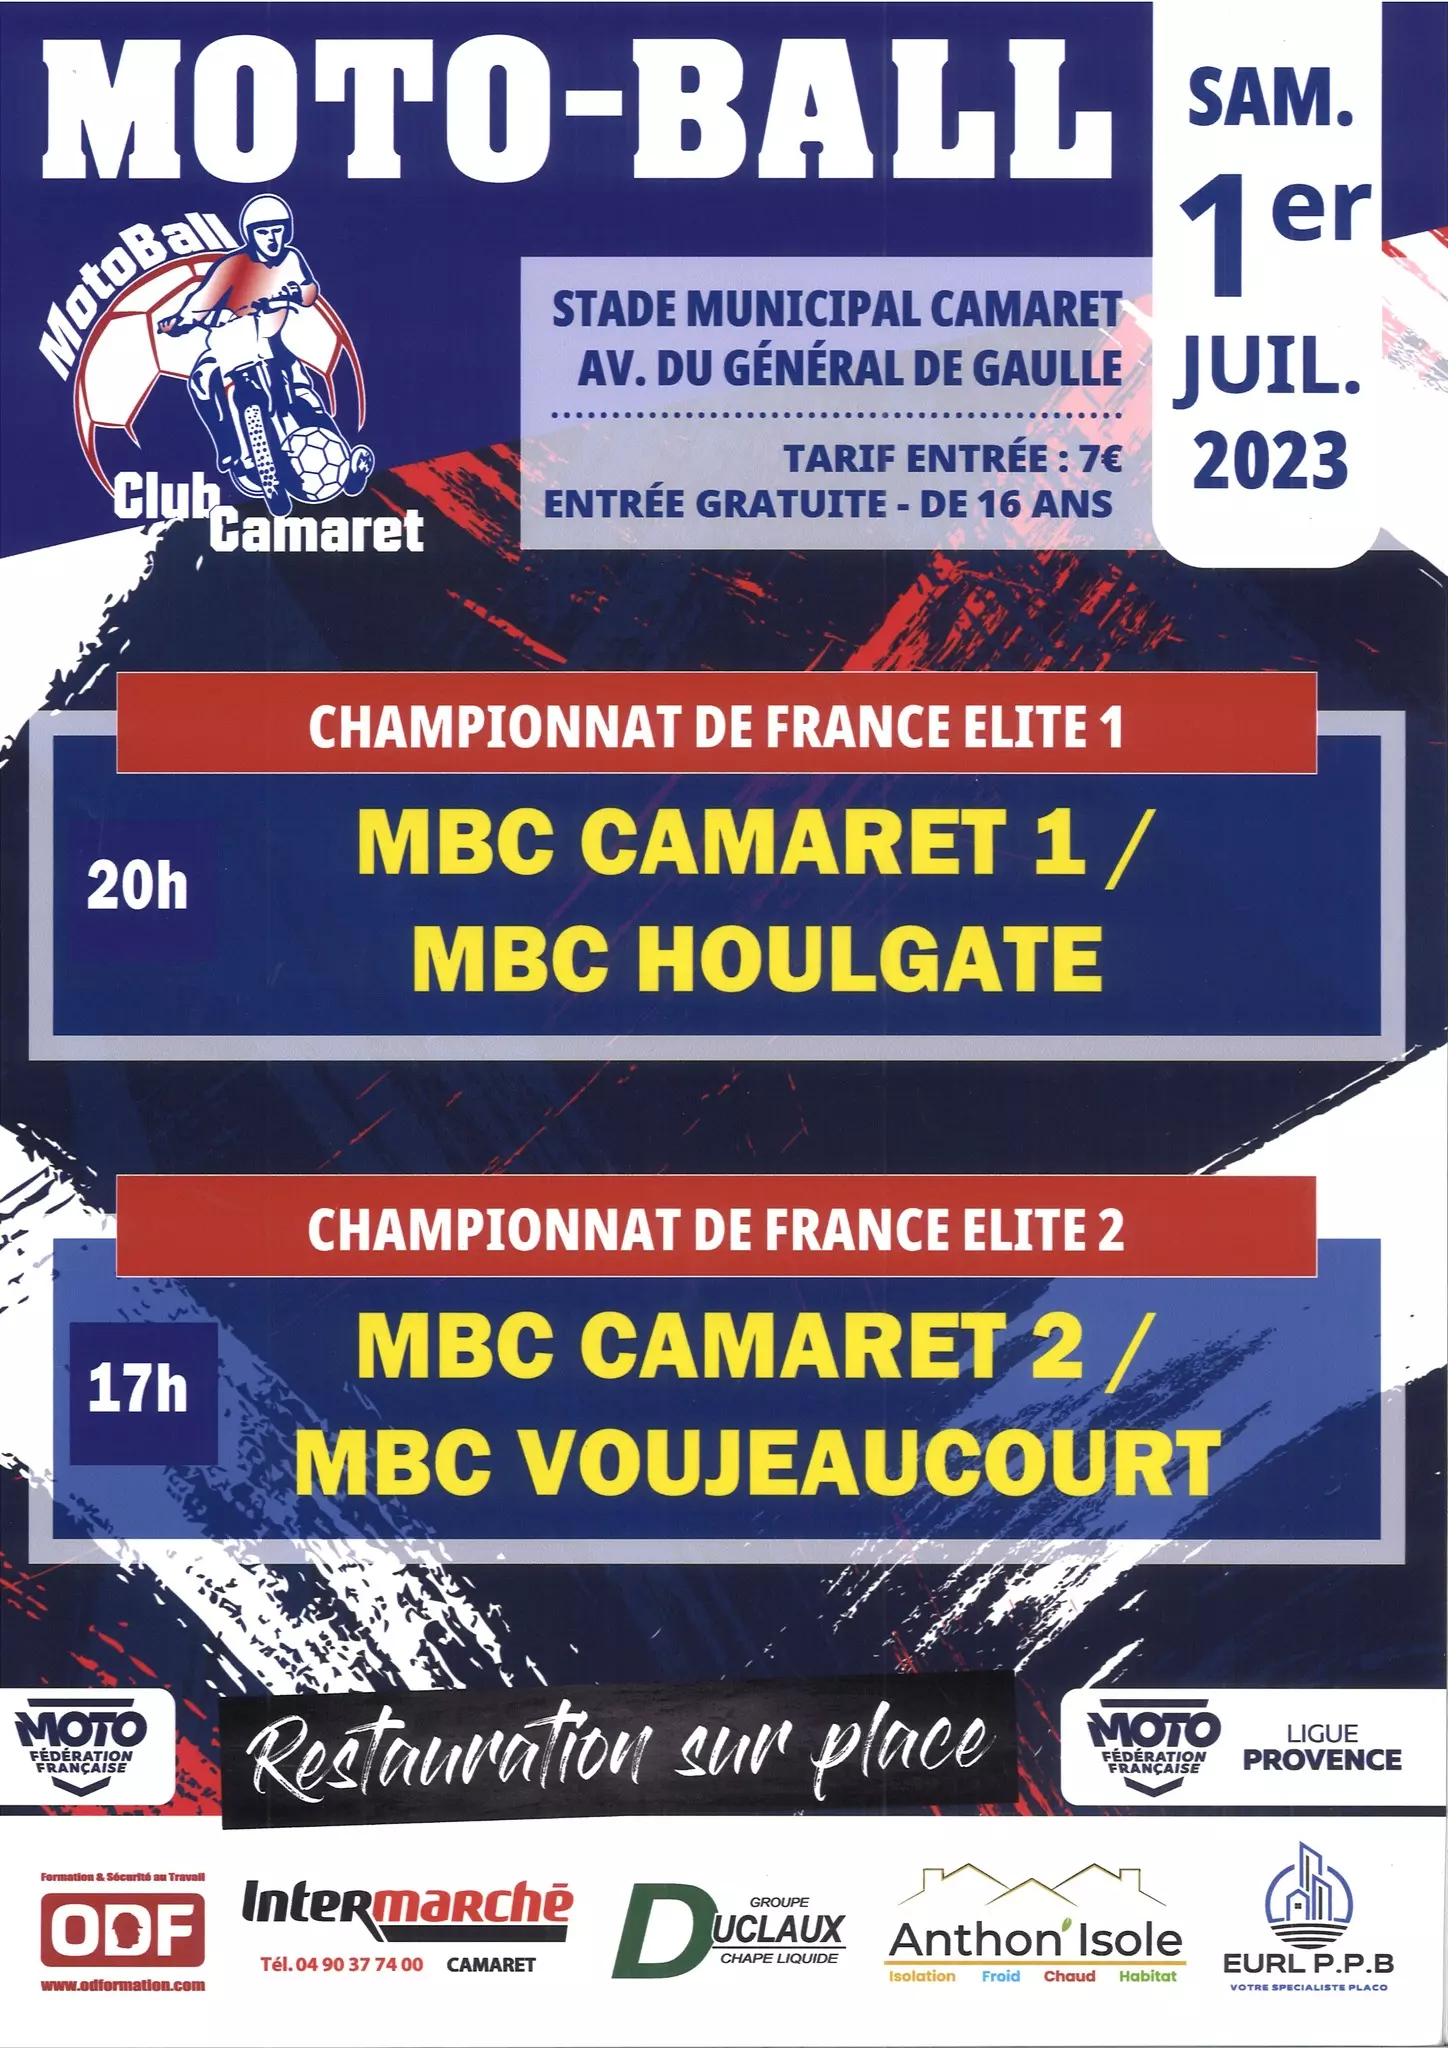 MBC Camaret / MBC Houlgate le samedi 1er juillet à 20h00